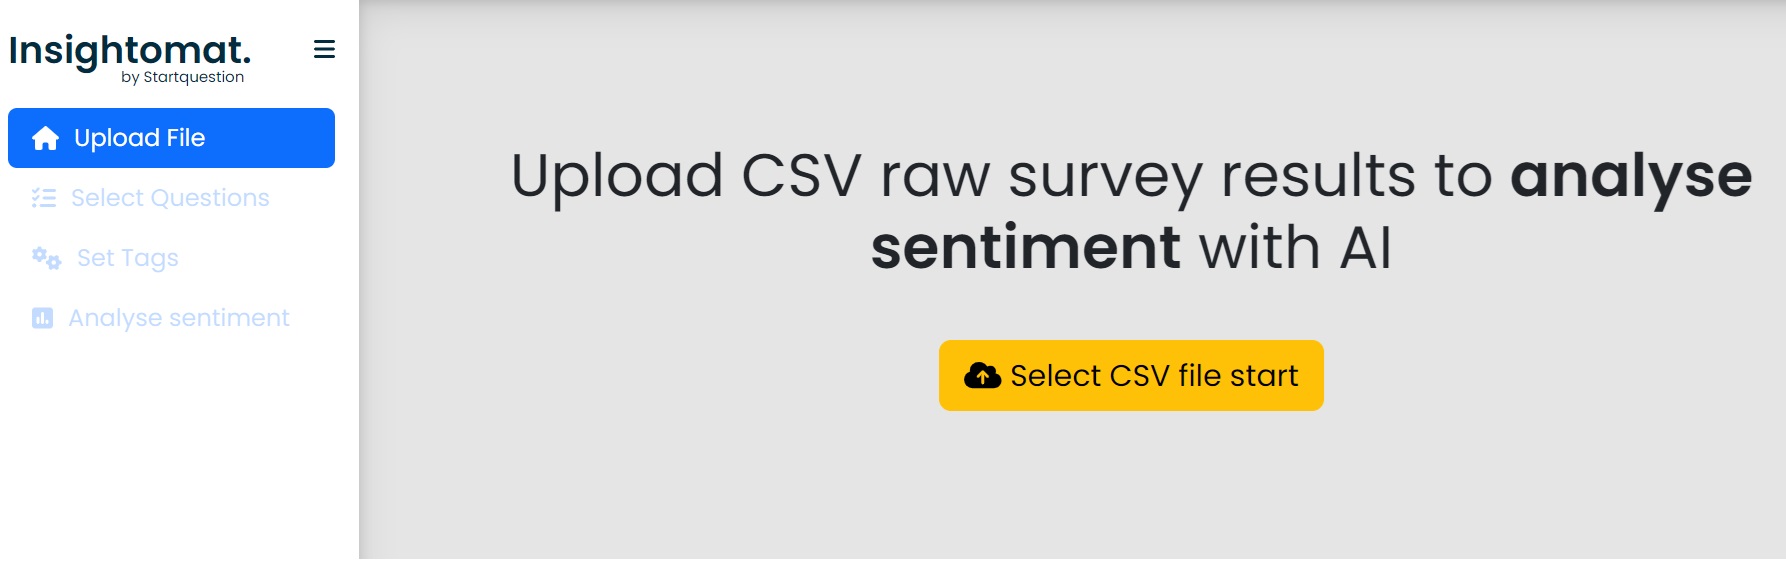 Analyze survey results with Insightomat